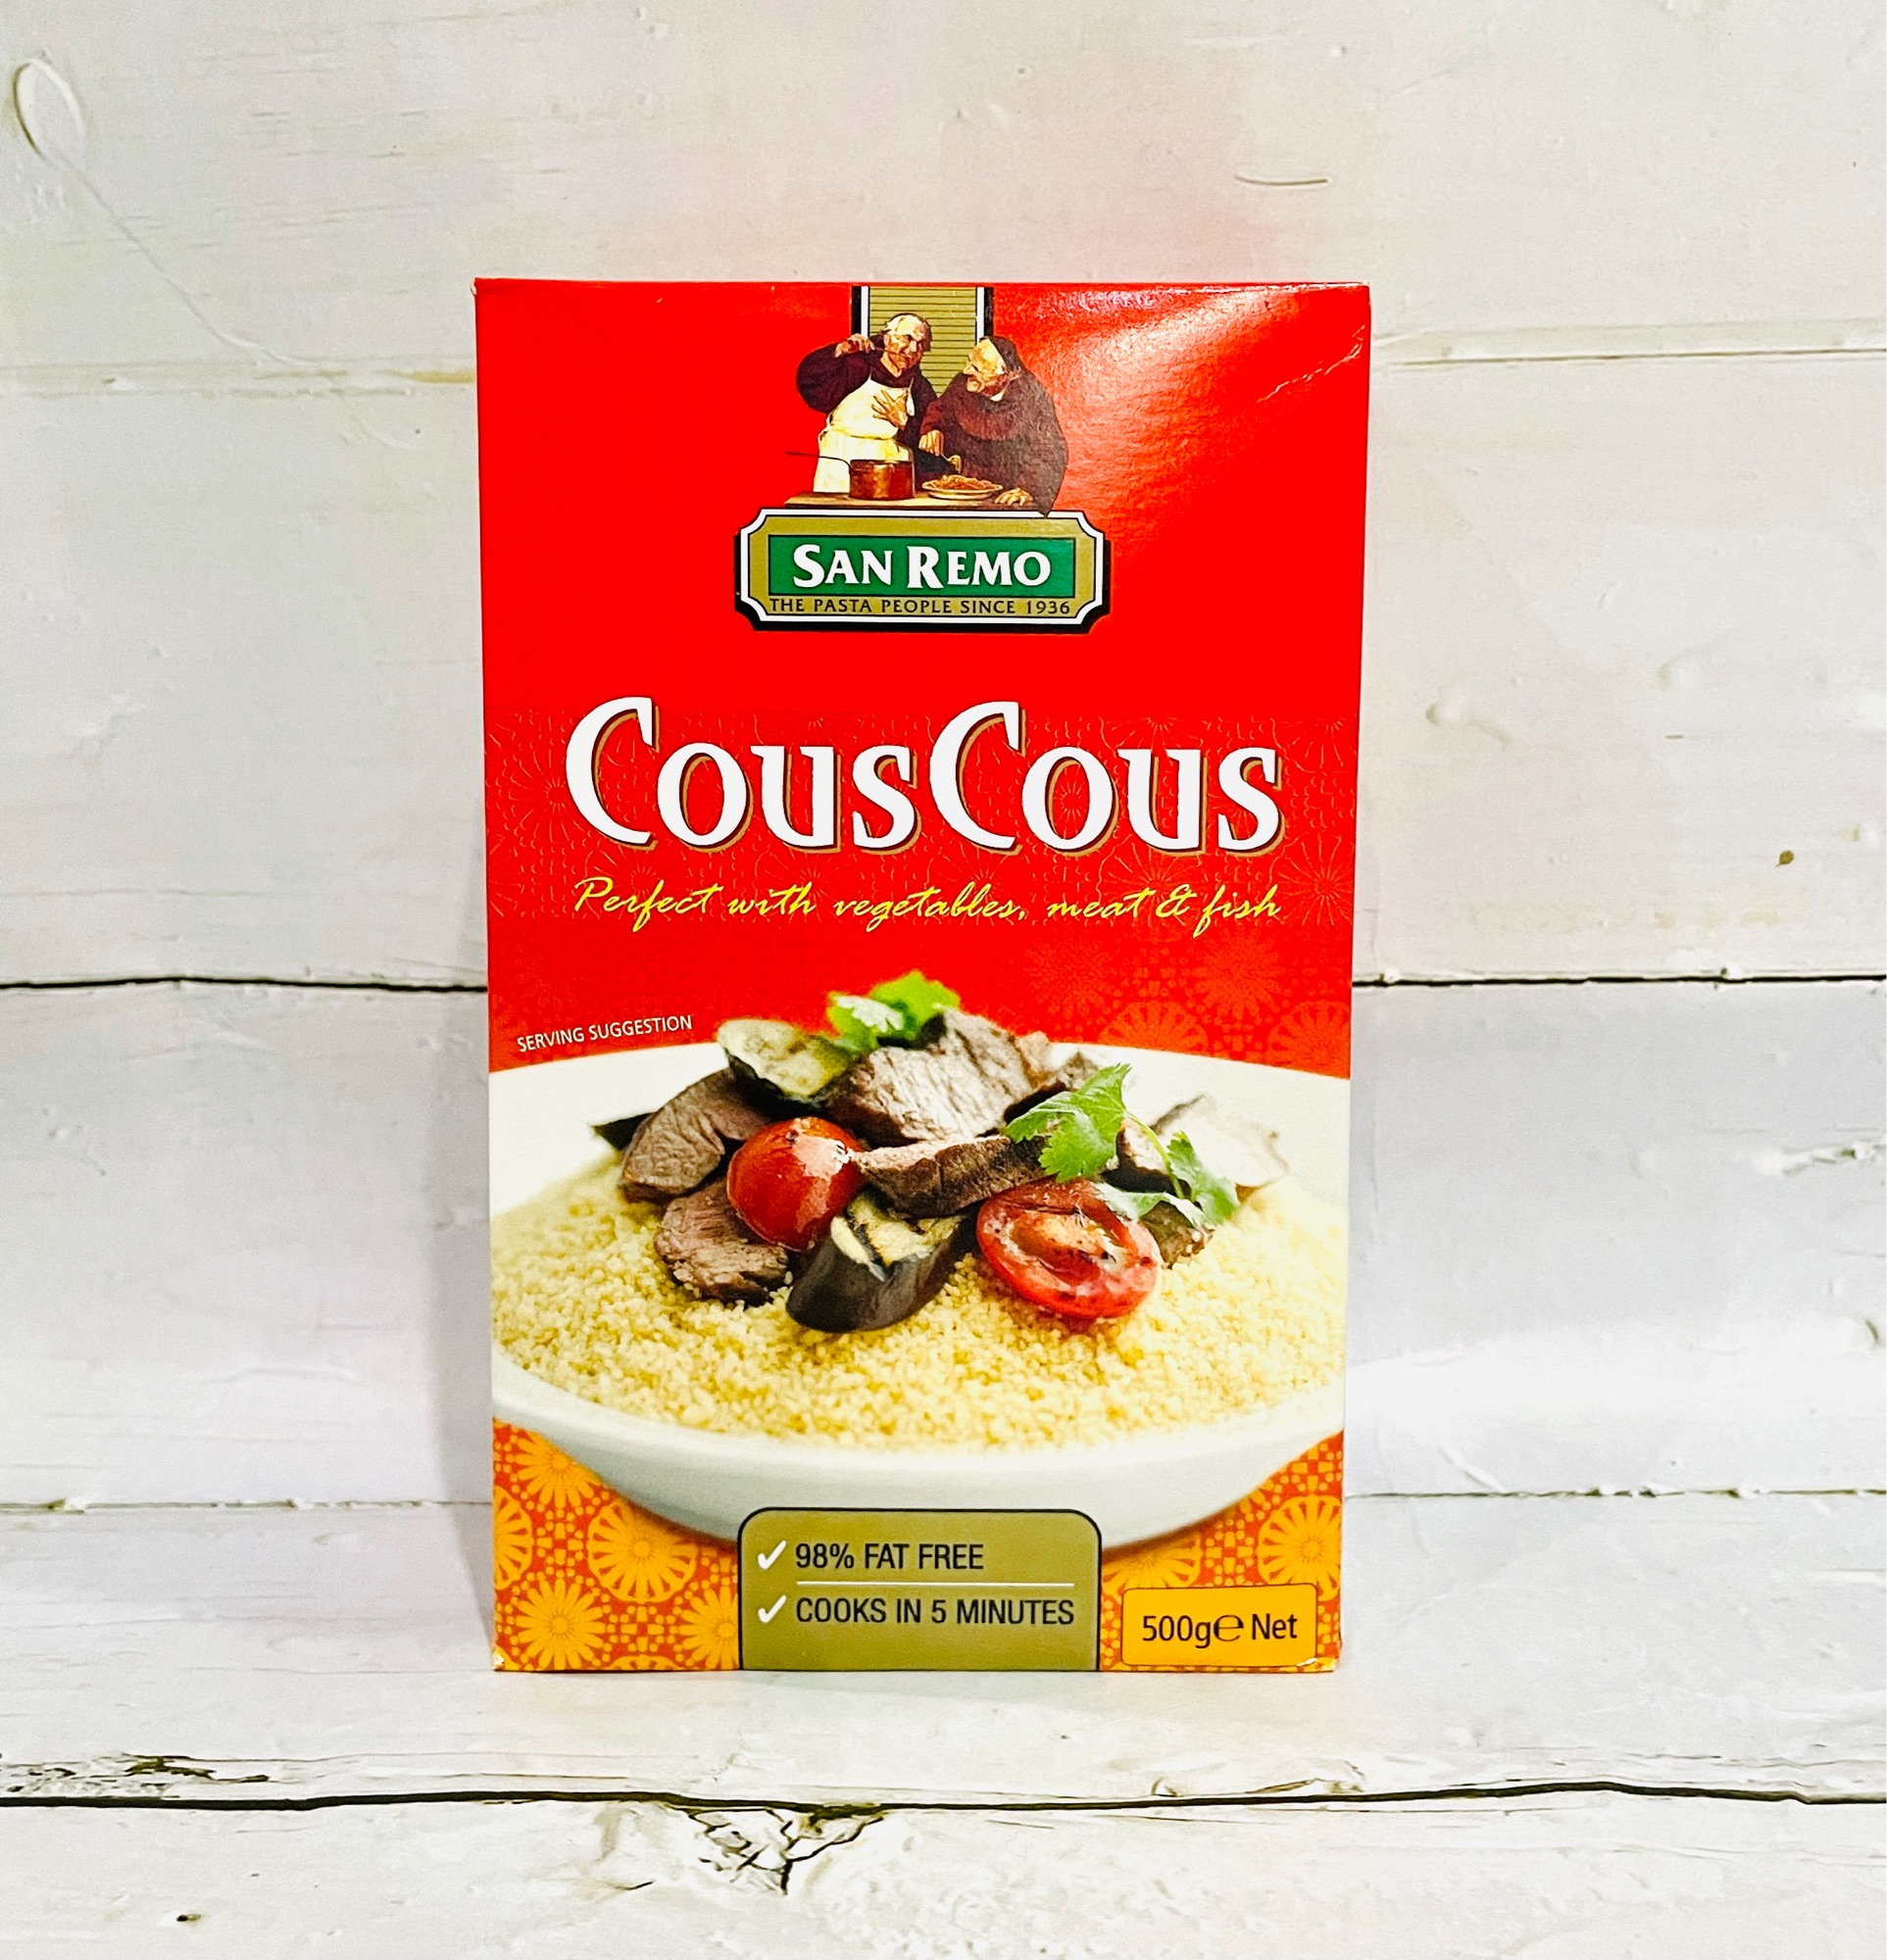 ?? Couscous “SAN REMO” คูส คูส ข้าวสาลีป่น 500g